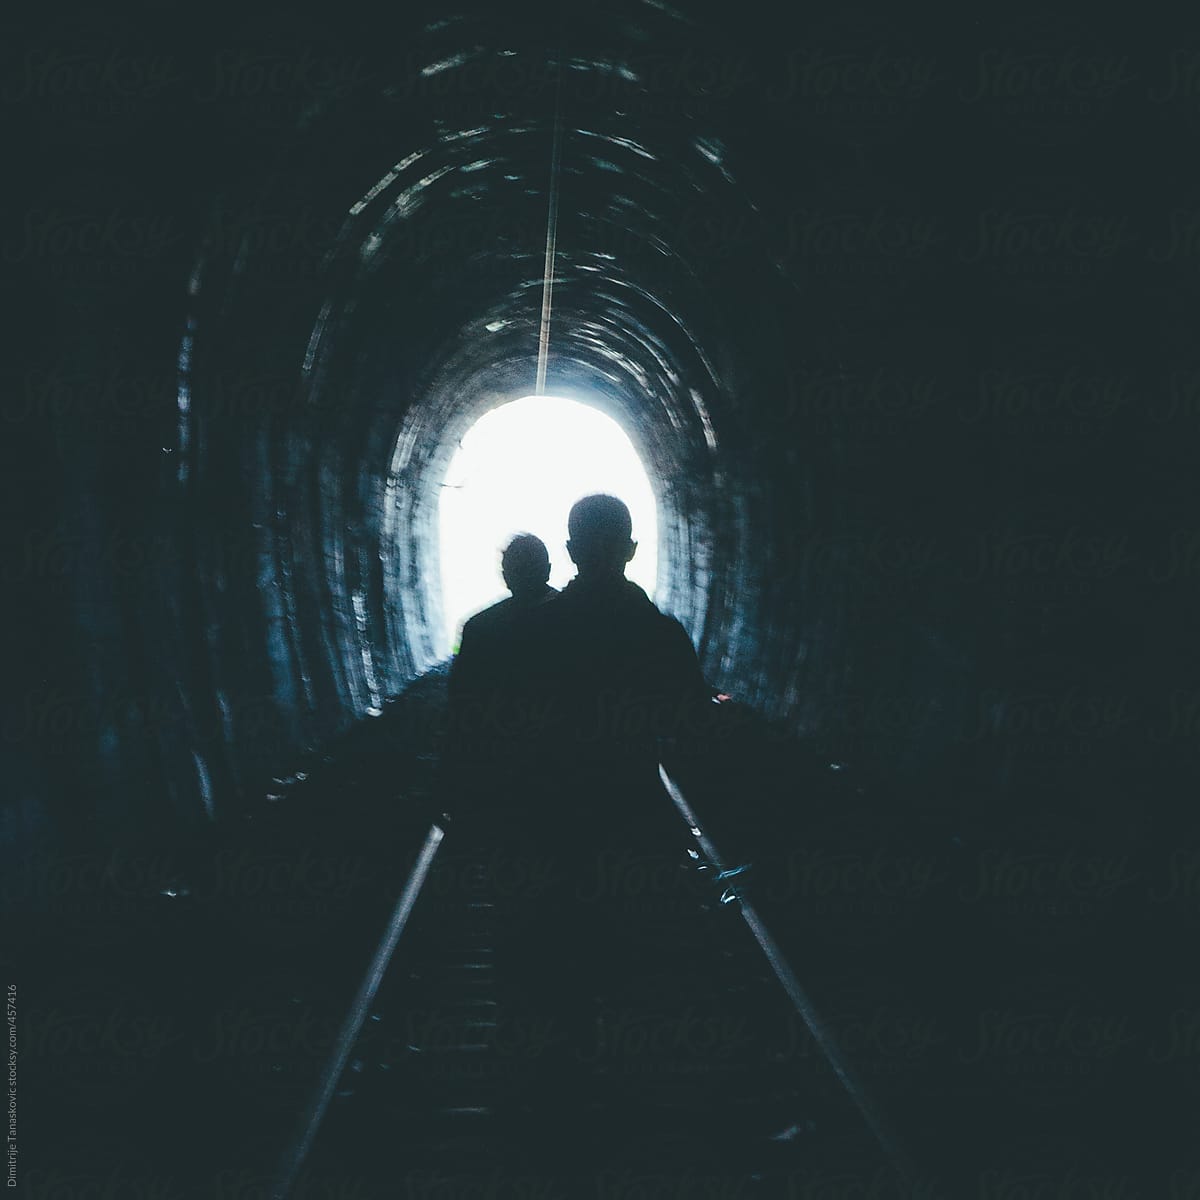 Two guys walking on abandoned rail